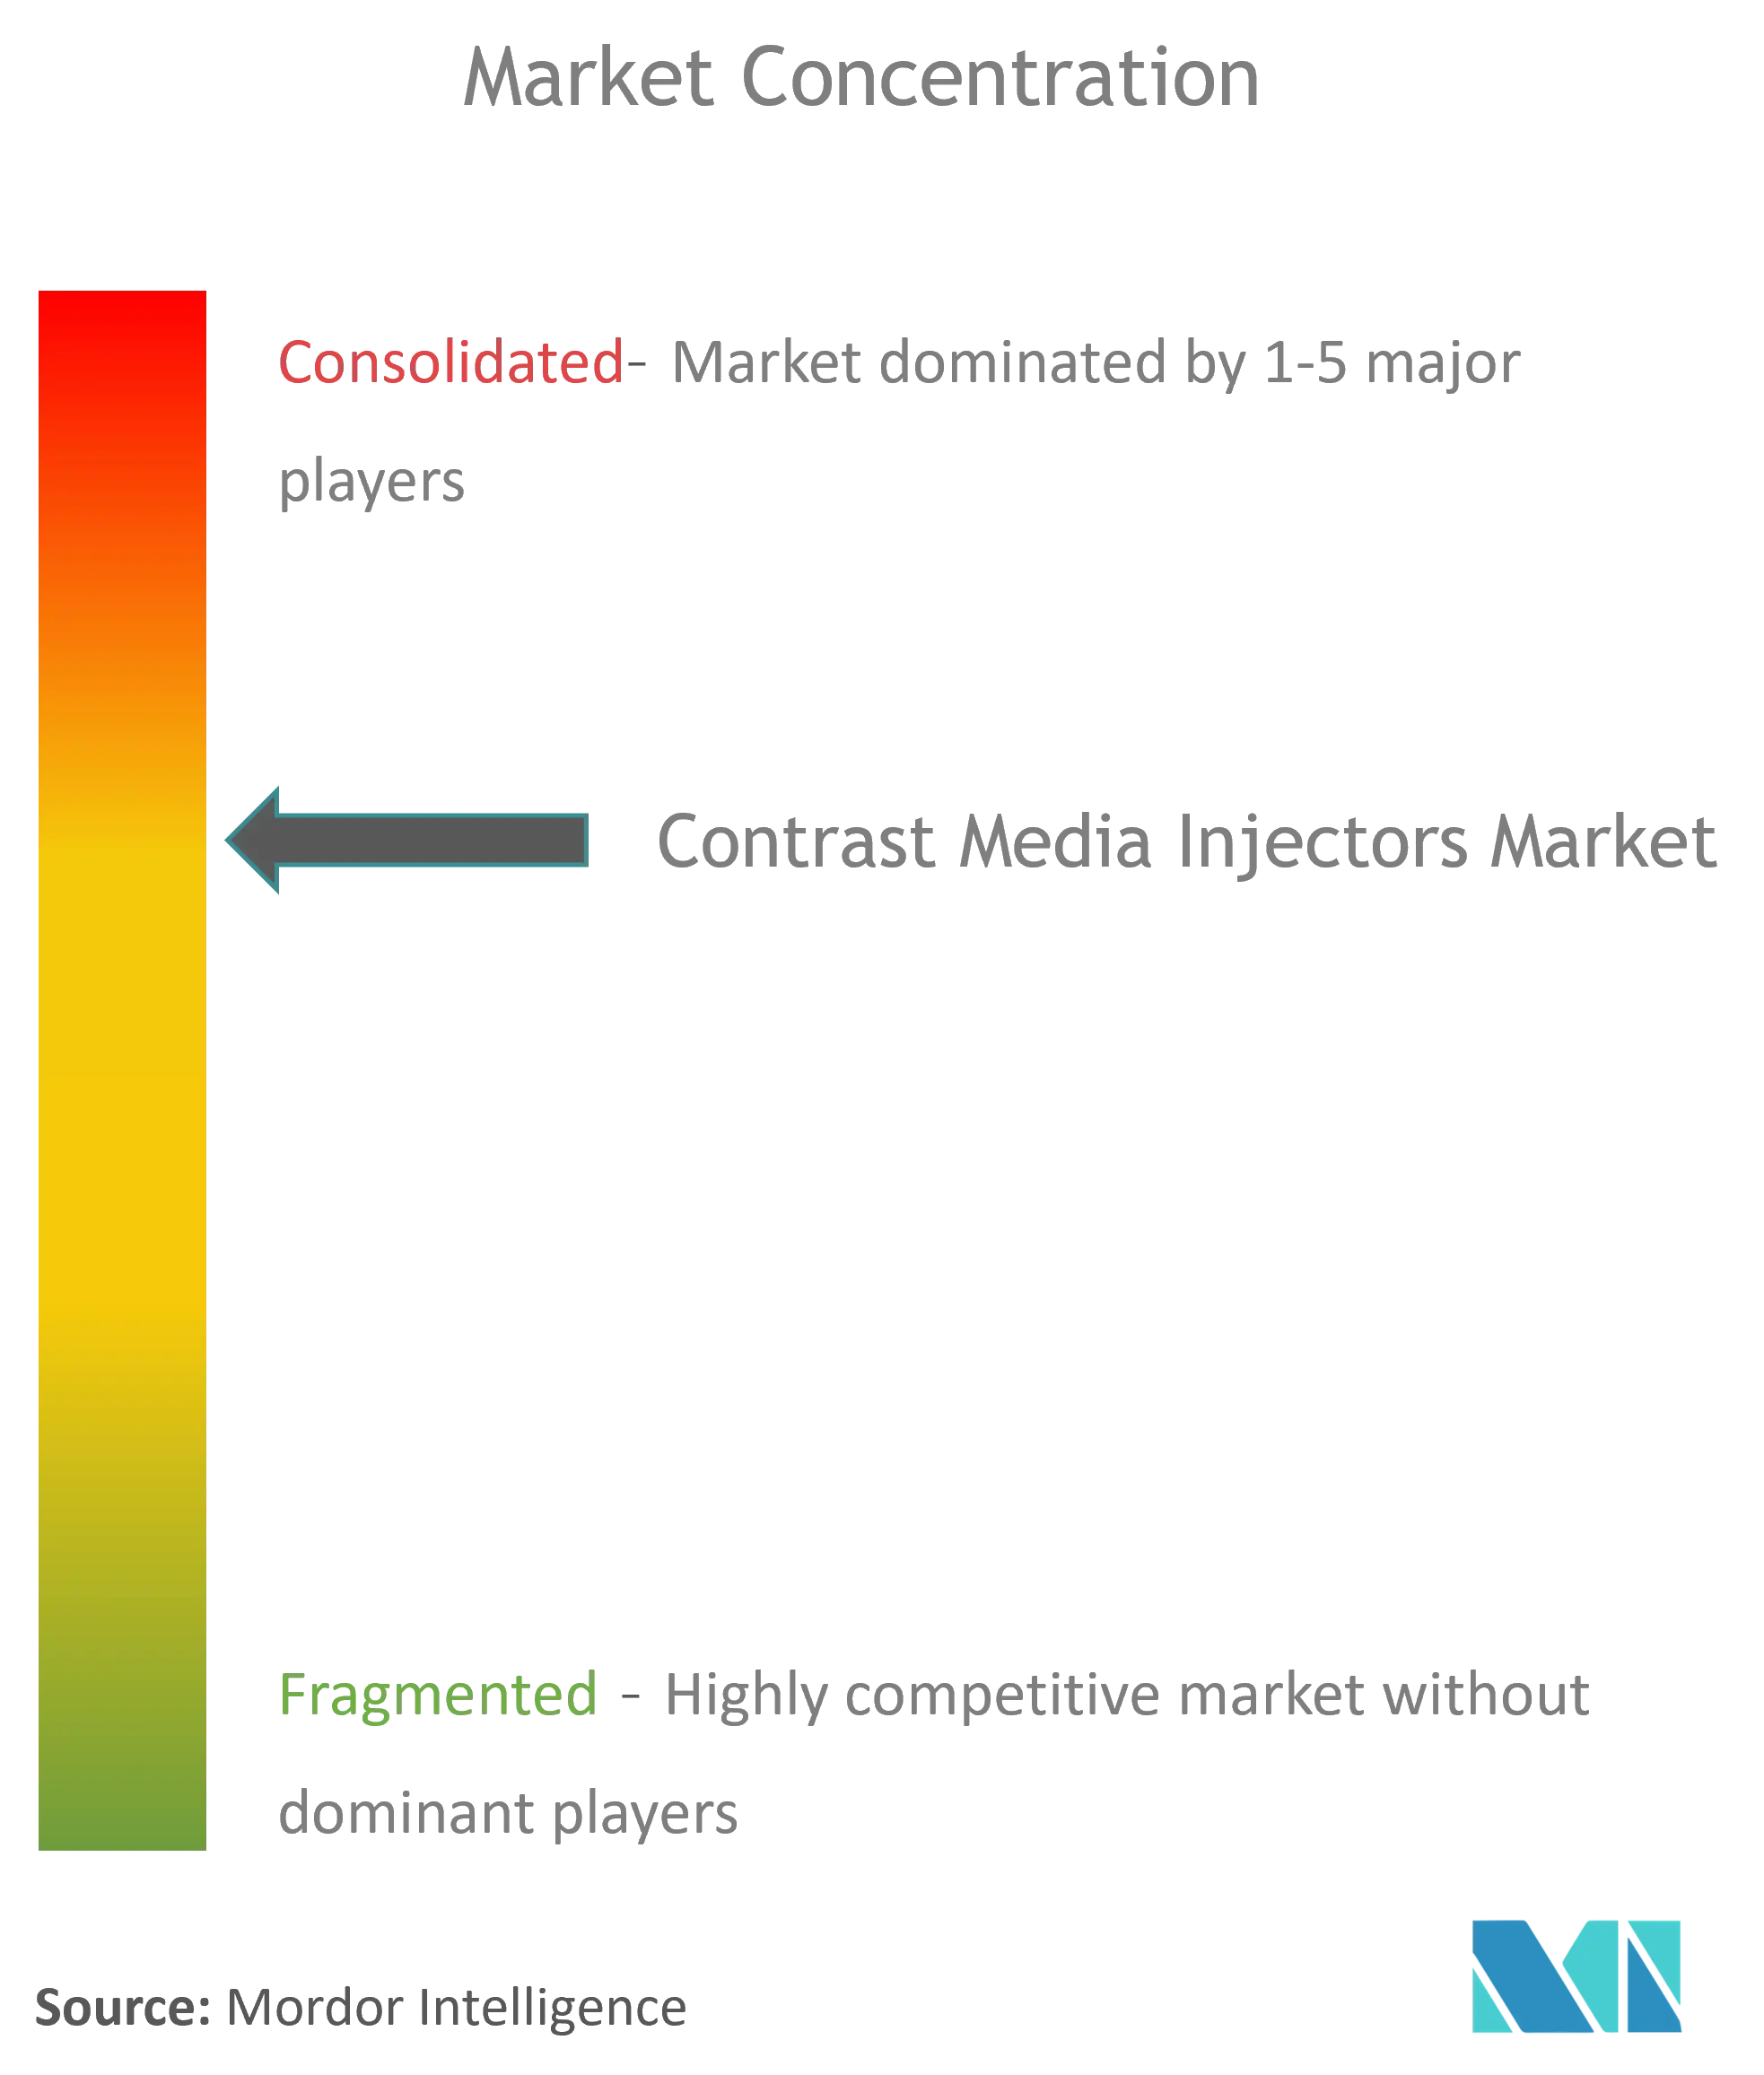 Contrast Media Injectors Market Concentration